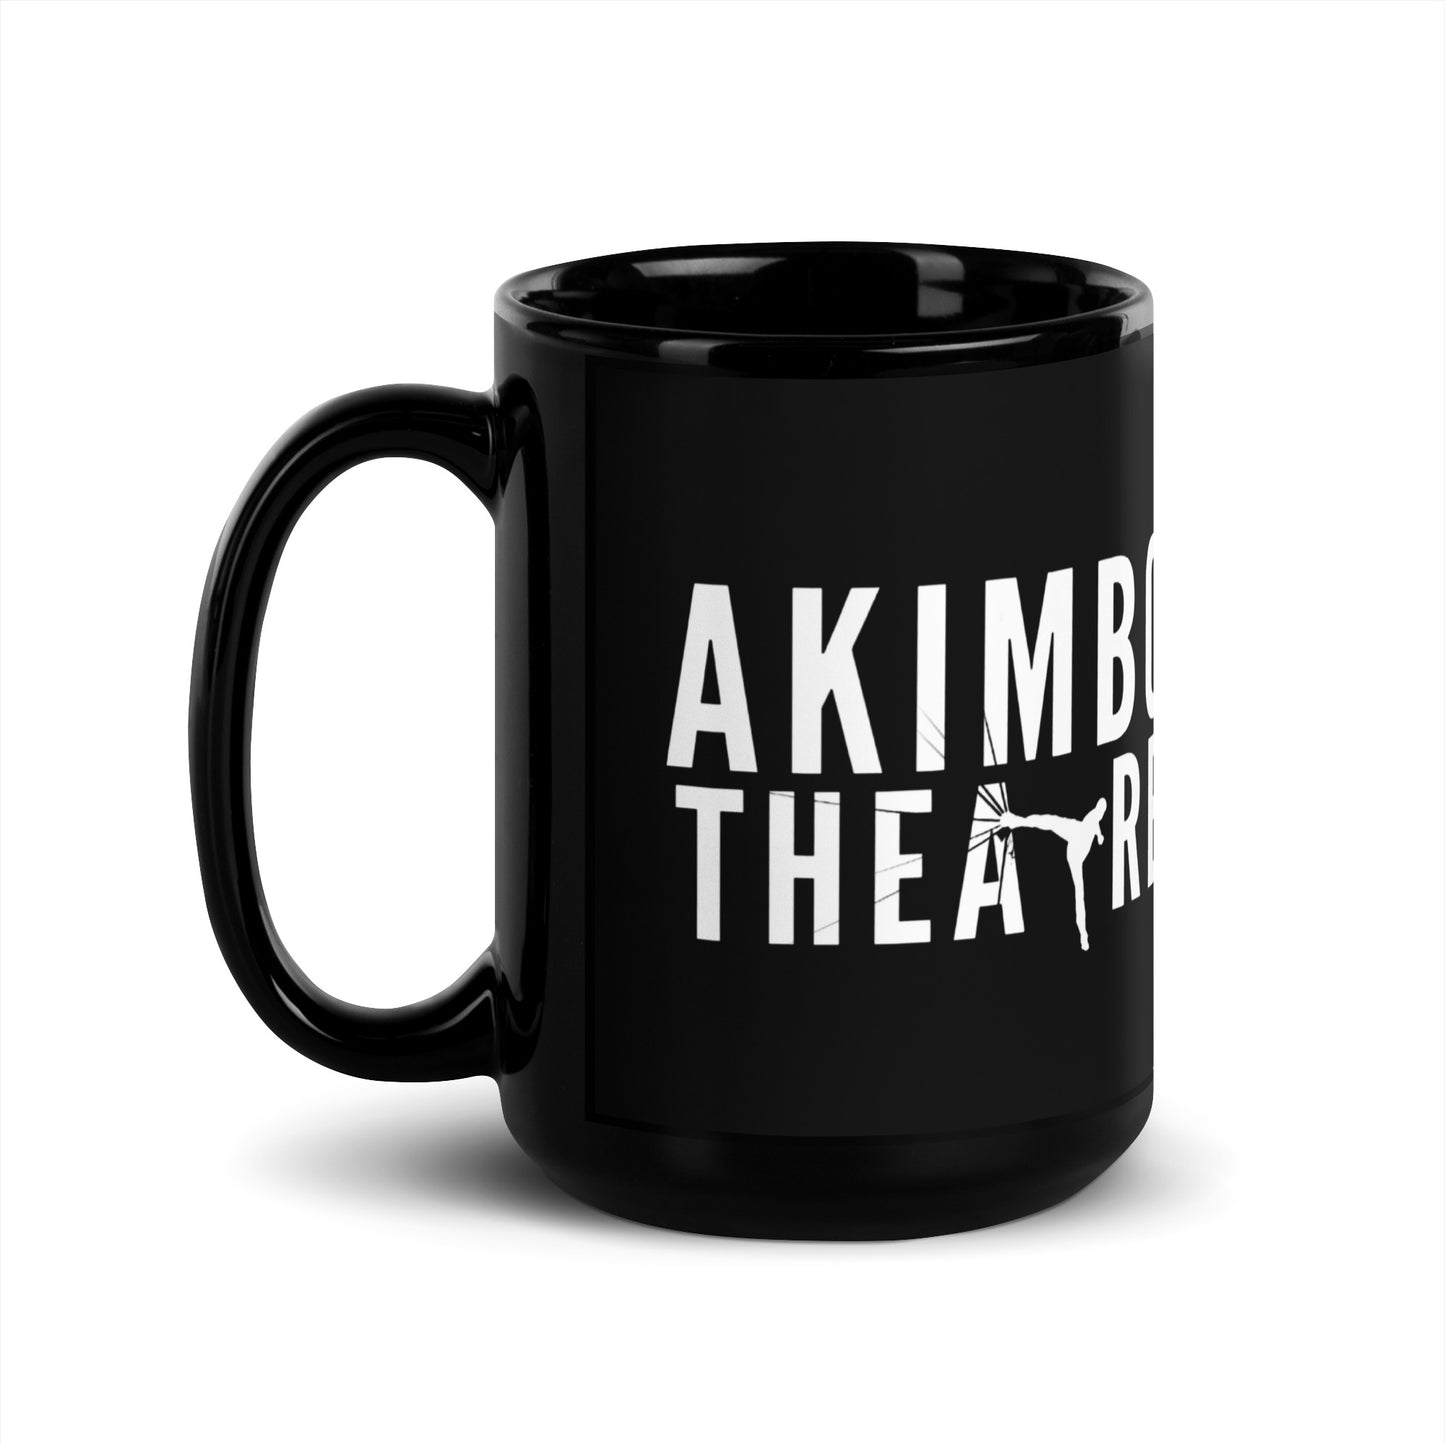 Akimbo Theatre Mug